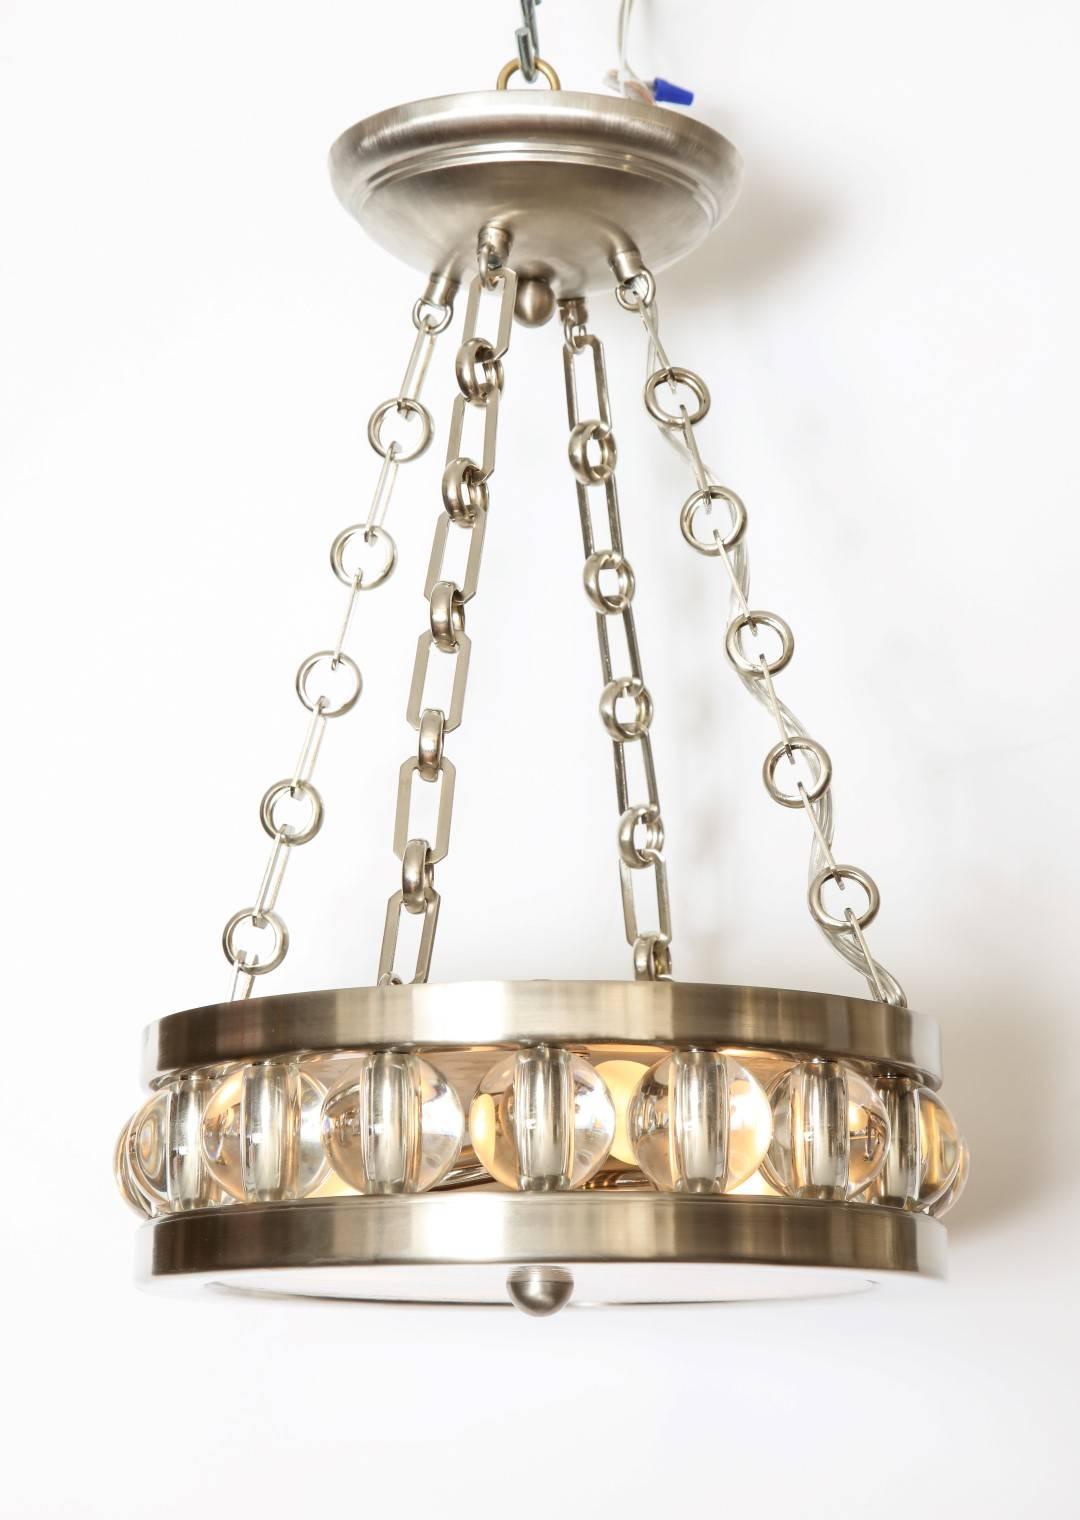 Art Deco Tambour Pendant Light with Chain, by David Duncan Studio For Sale